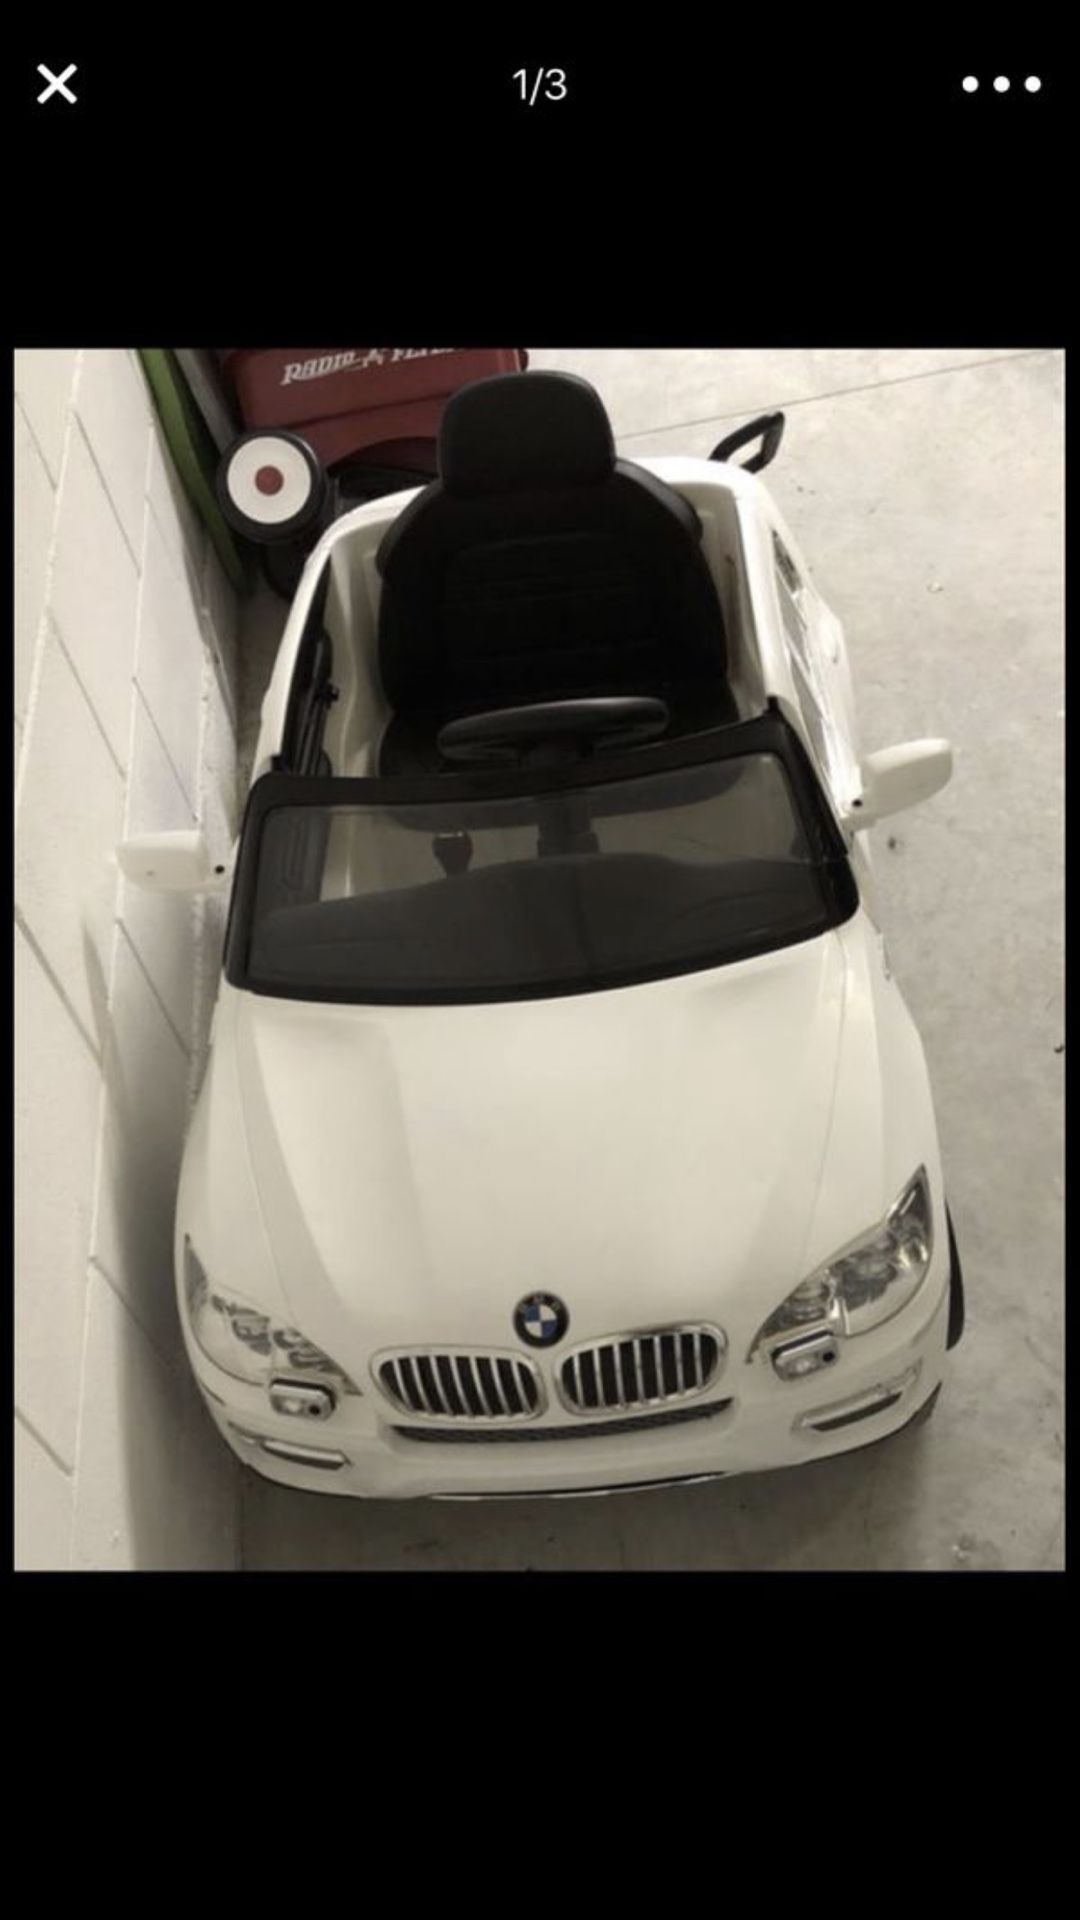 BMW X6 Electric Toy Car